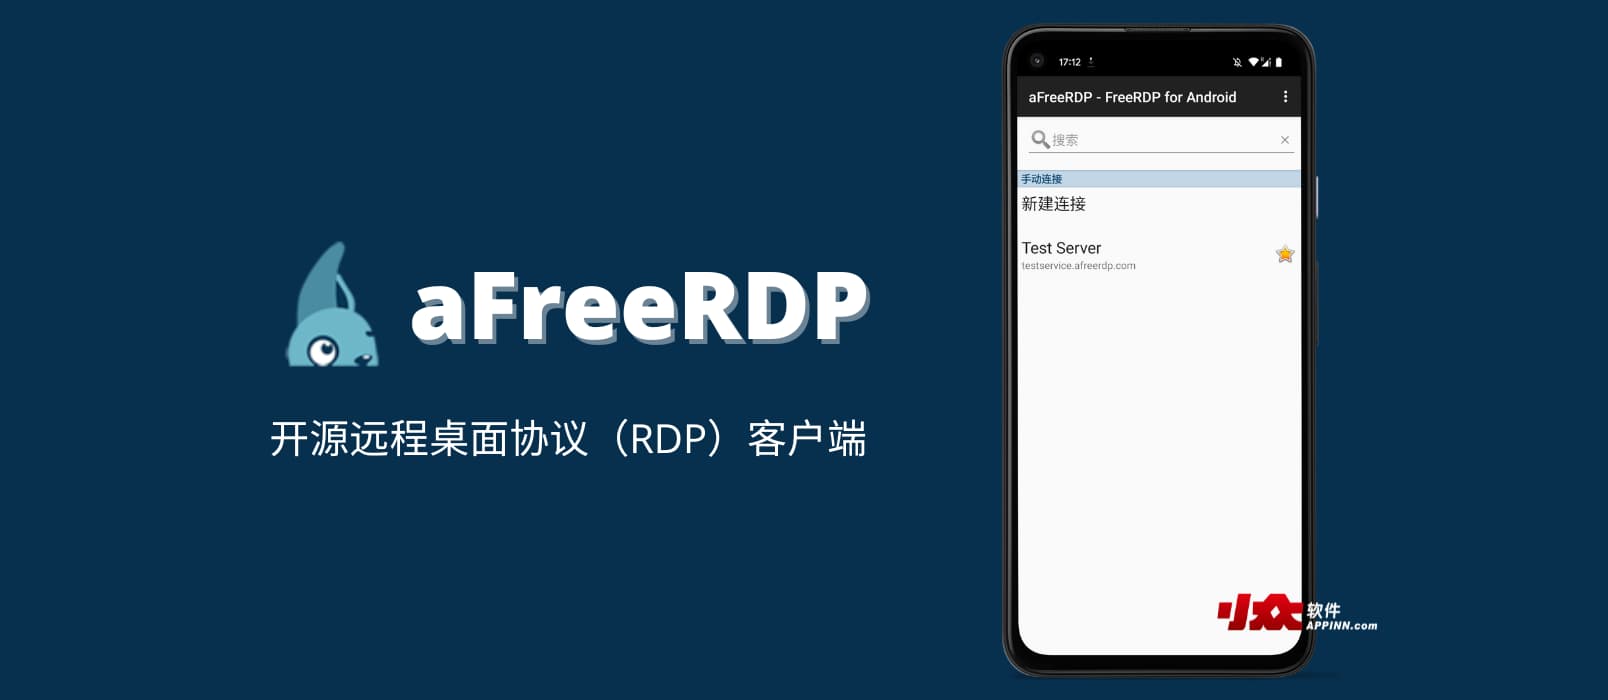 aFreeRDP - 远程桌面协议（RDP）客户端 FreeRDP 的 Android 版本  